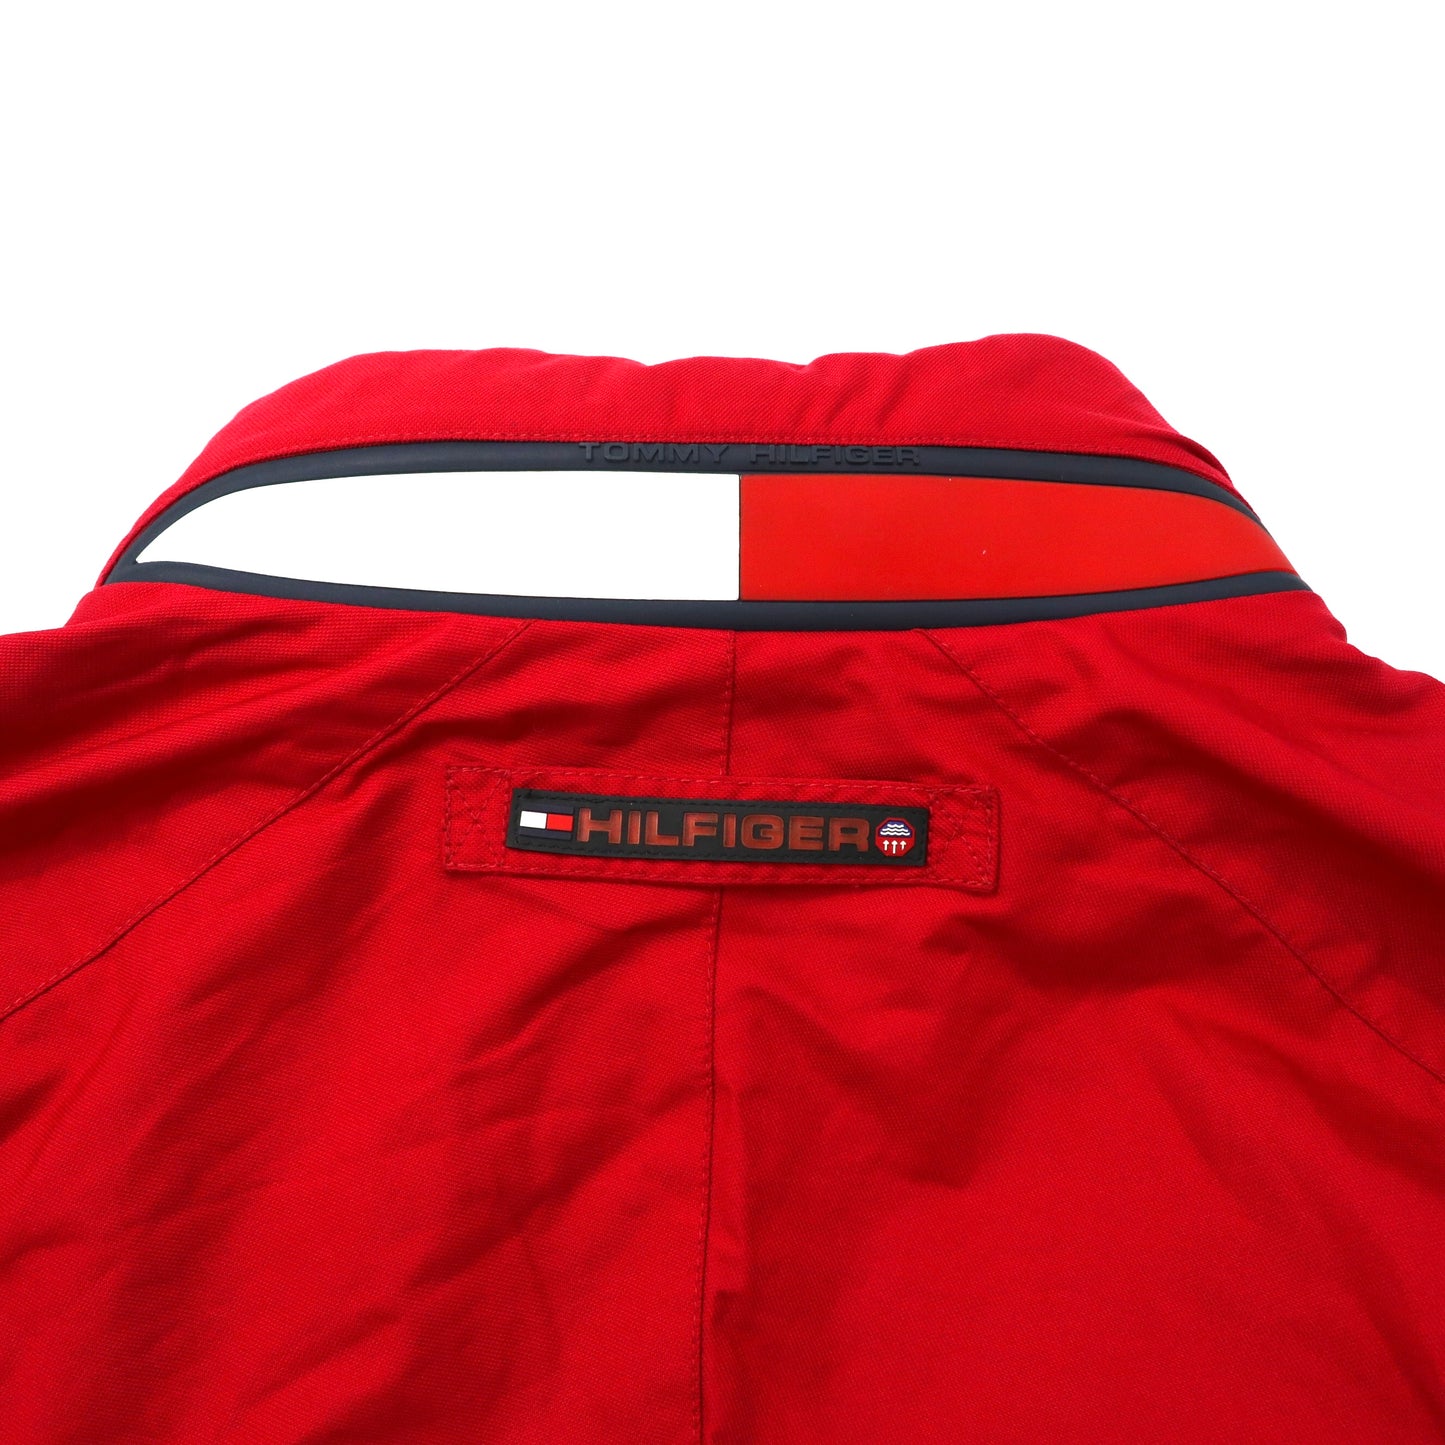 TOMMY HILFIGER リバーシブル セーリングジャケット L ブラック レッド ナイロン フード収納式 90年代